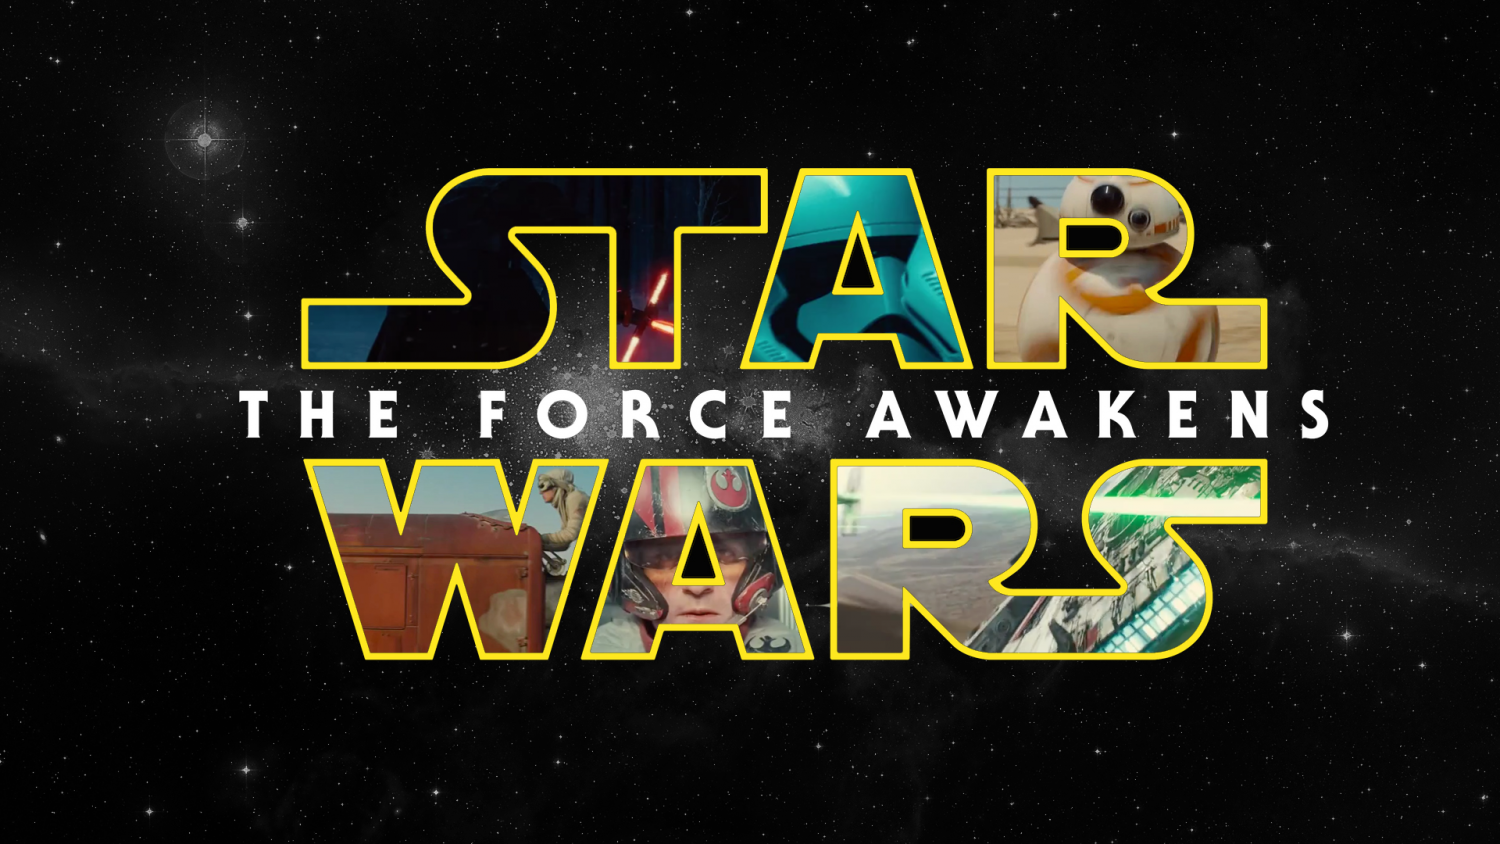 Jedi, star wars 7, star wars: the force awakens, review